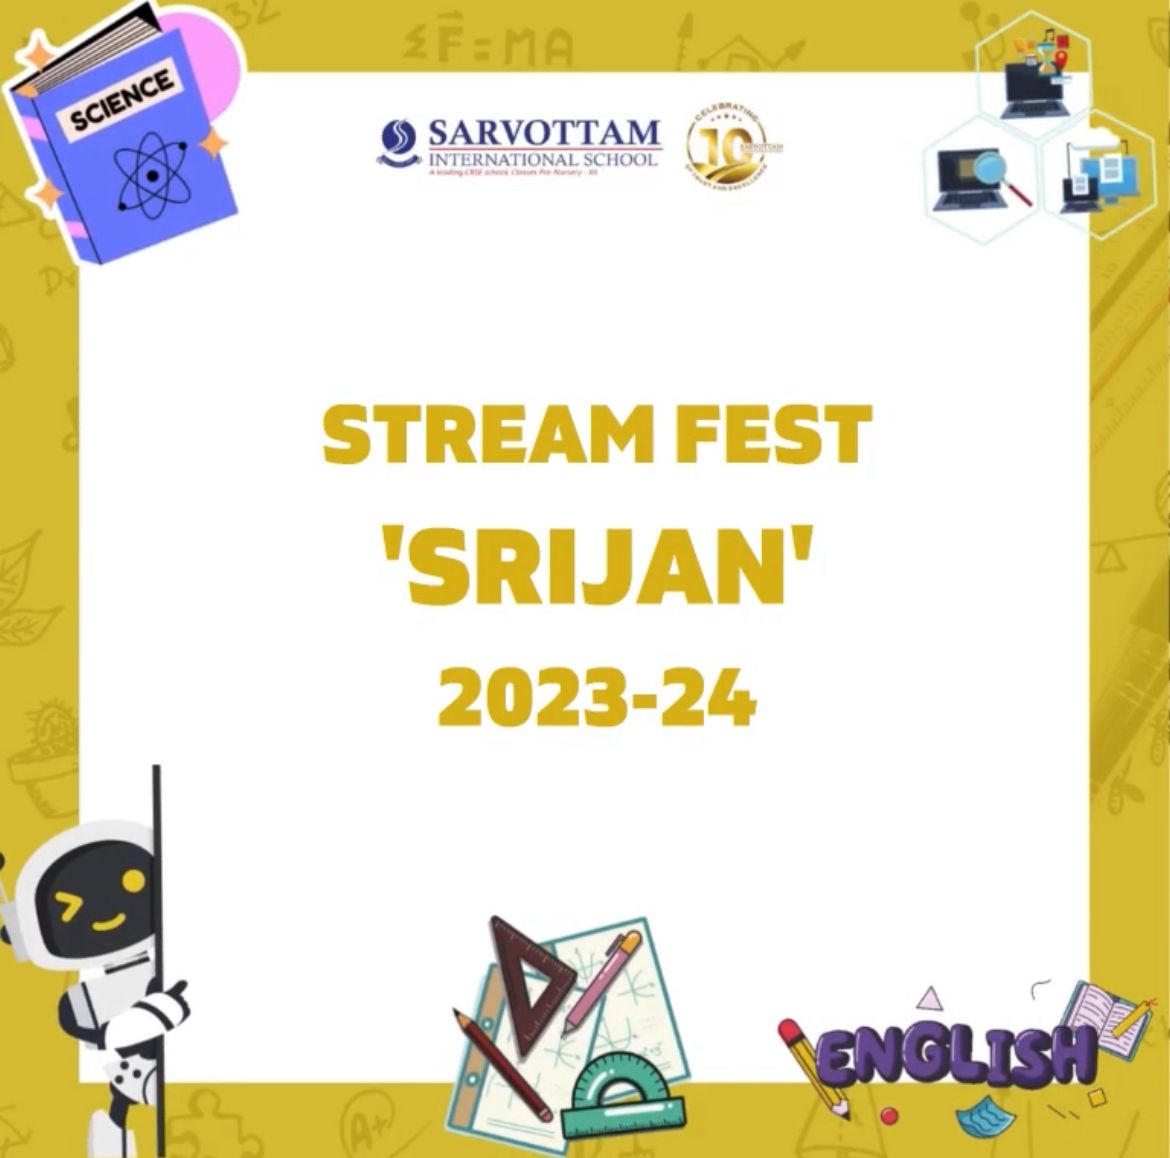 Srijan - An Annual Stream Fest